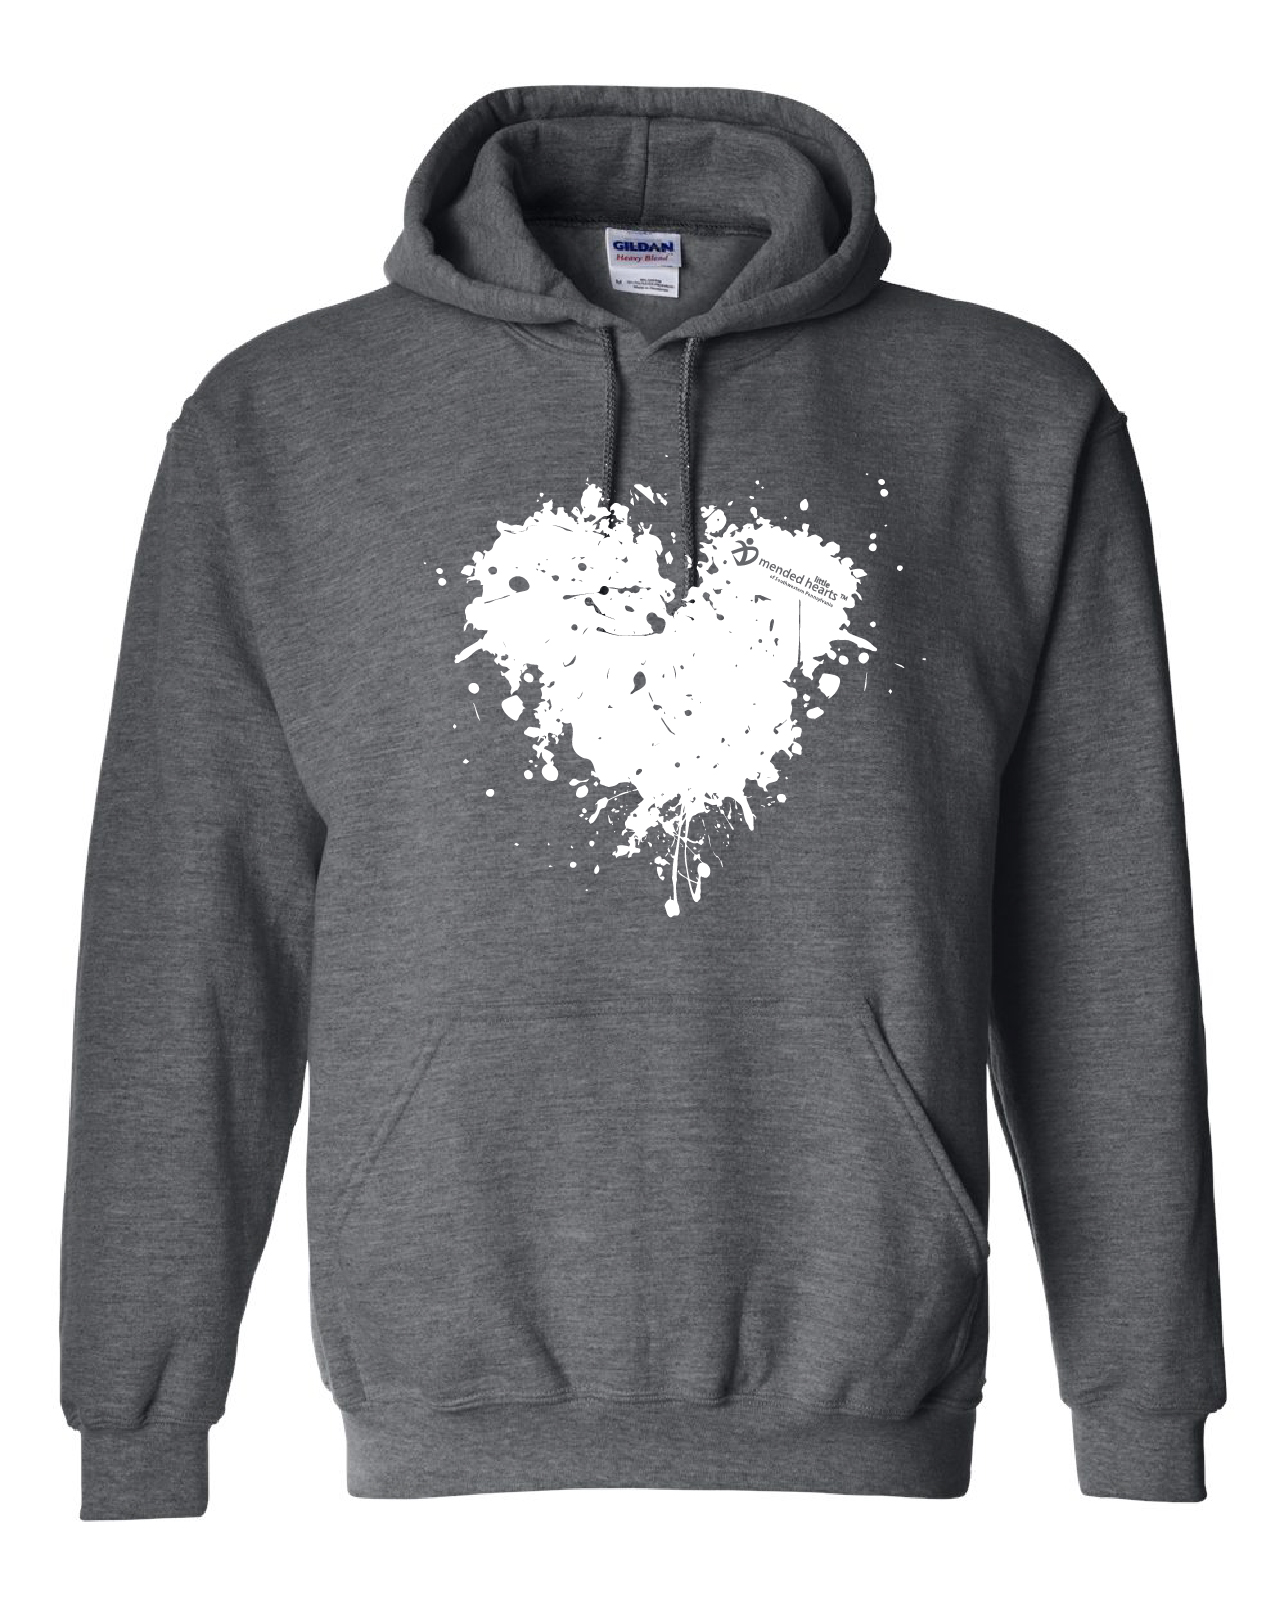 Splatter Heart Hooded Sweatshirt Available in Navy or Dark Heather